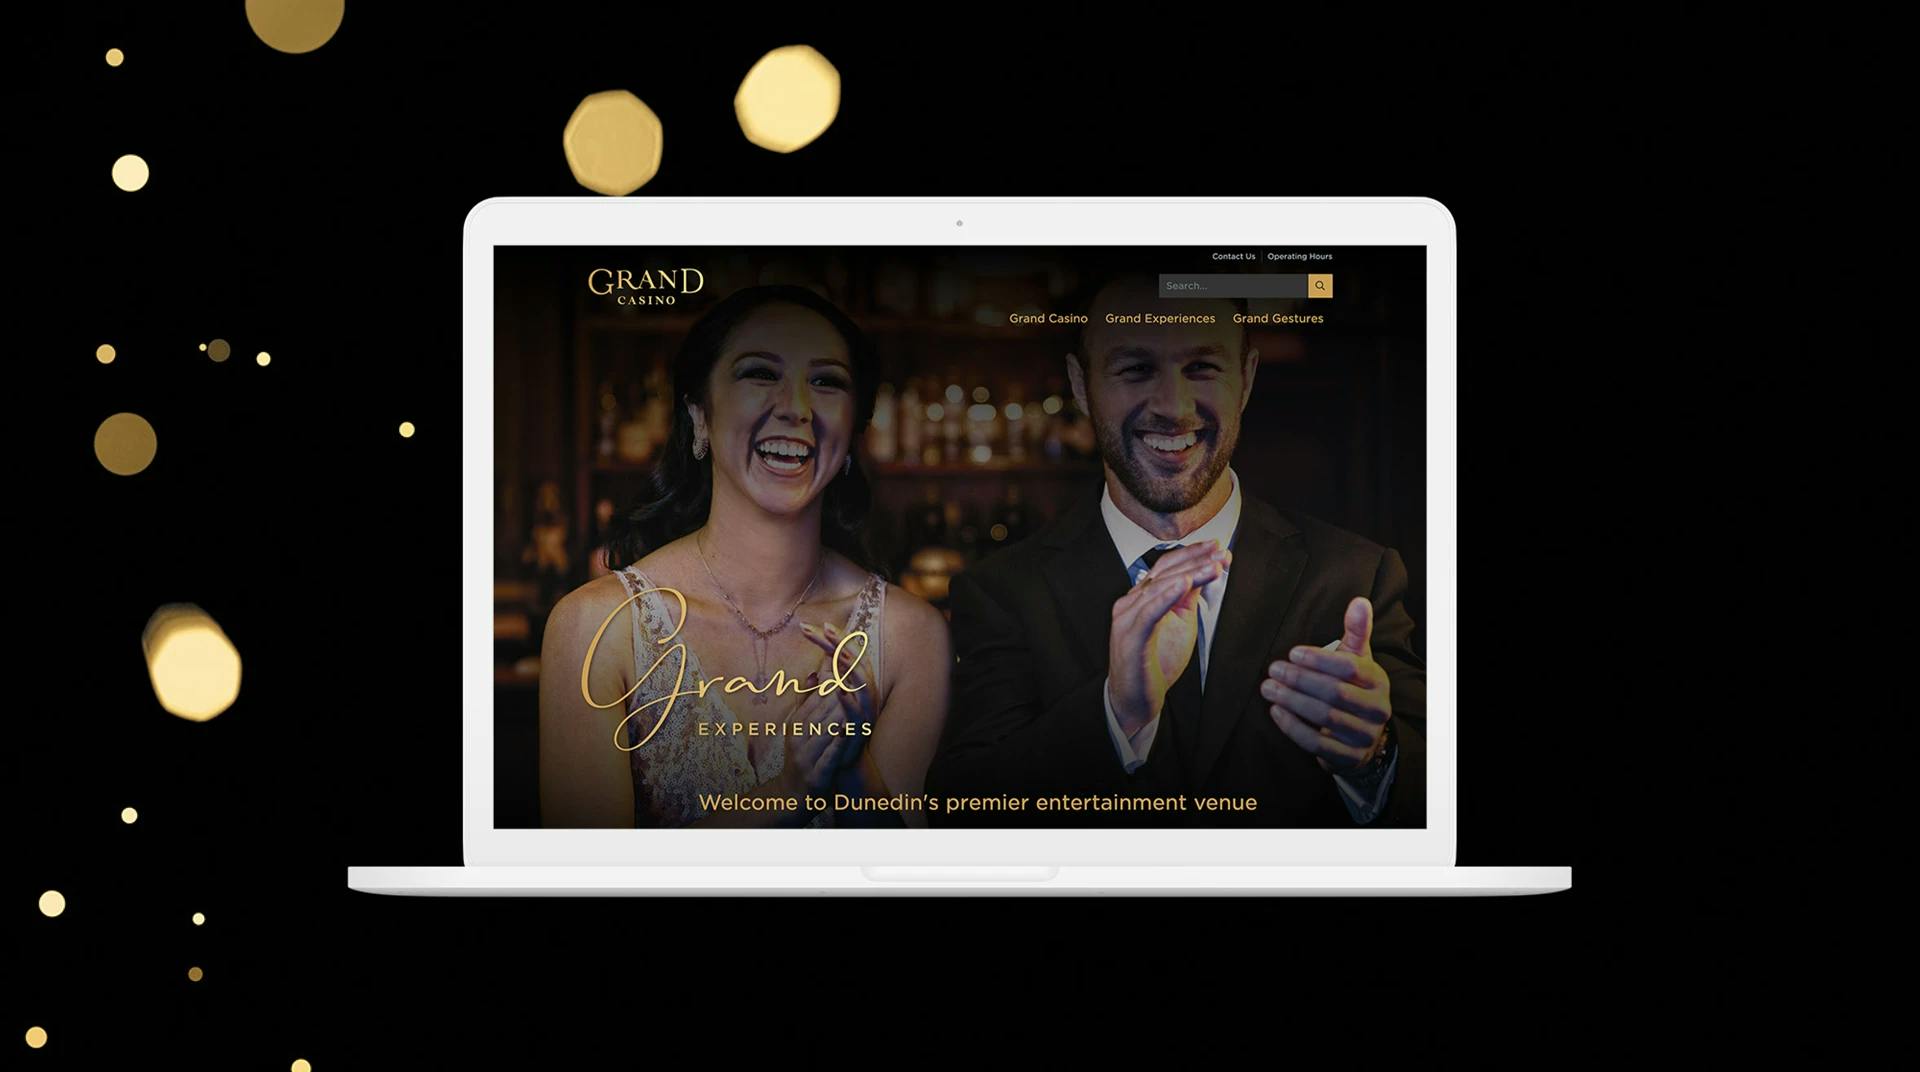  firebrand grand casino dunedin website design